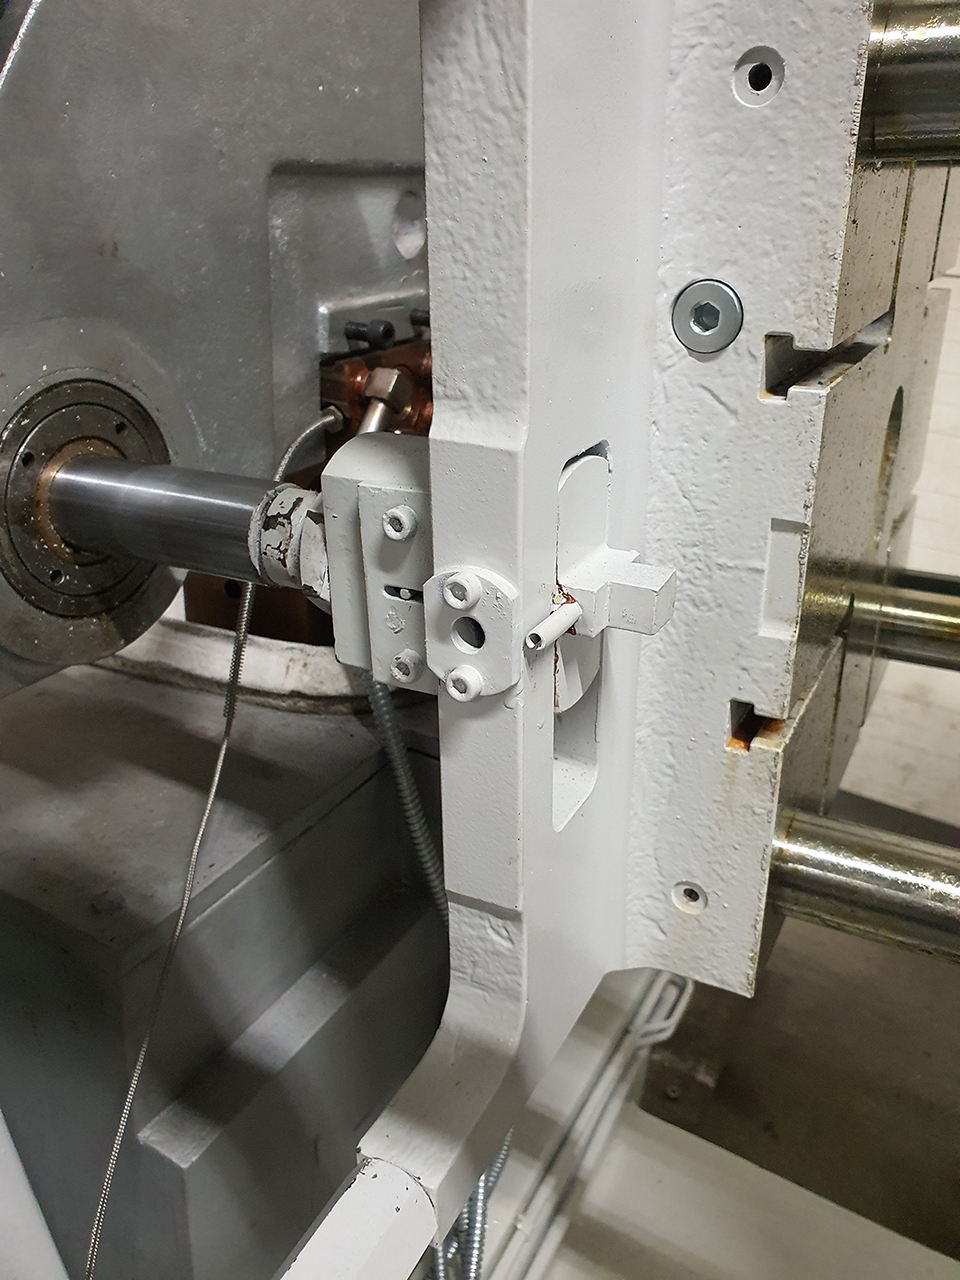 Reacondicionamiento de la máquina de fundición a presión de cámara caliente Frech DAW 20